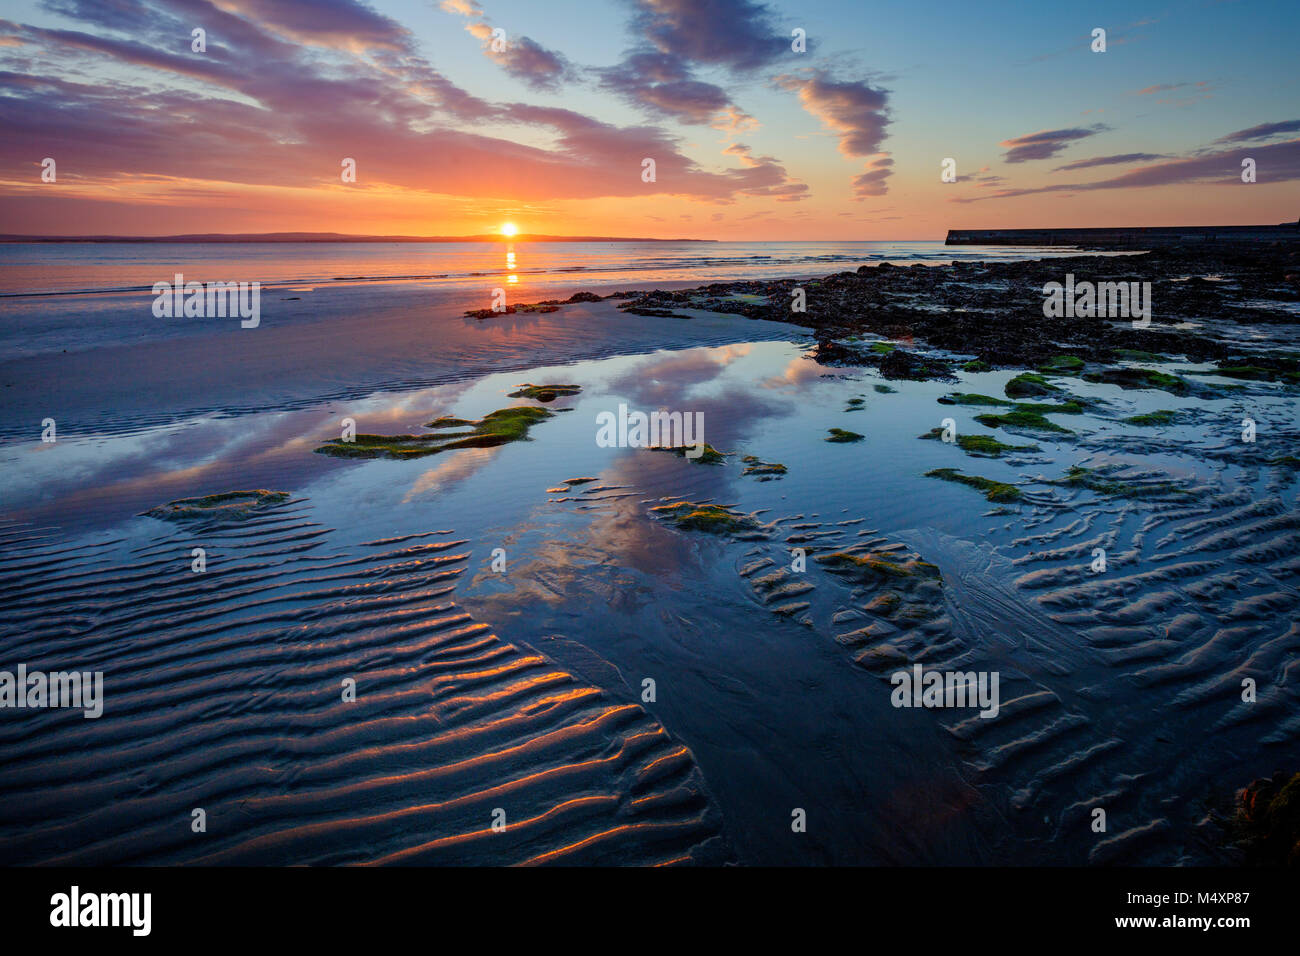 Coastal sunset from Enniscrone Beach, County Sligo, Ireland. Stock Photo